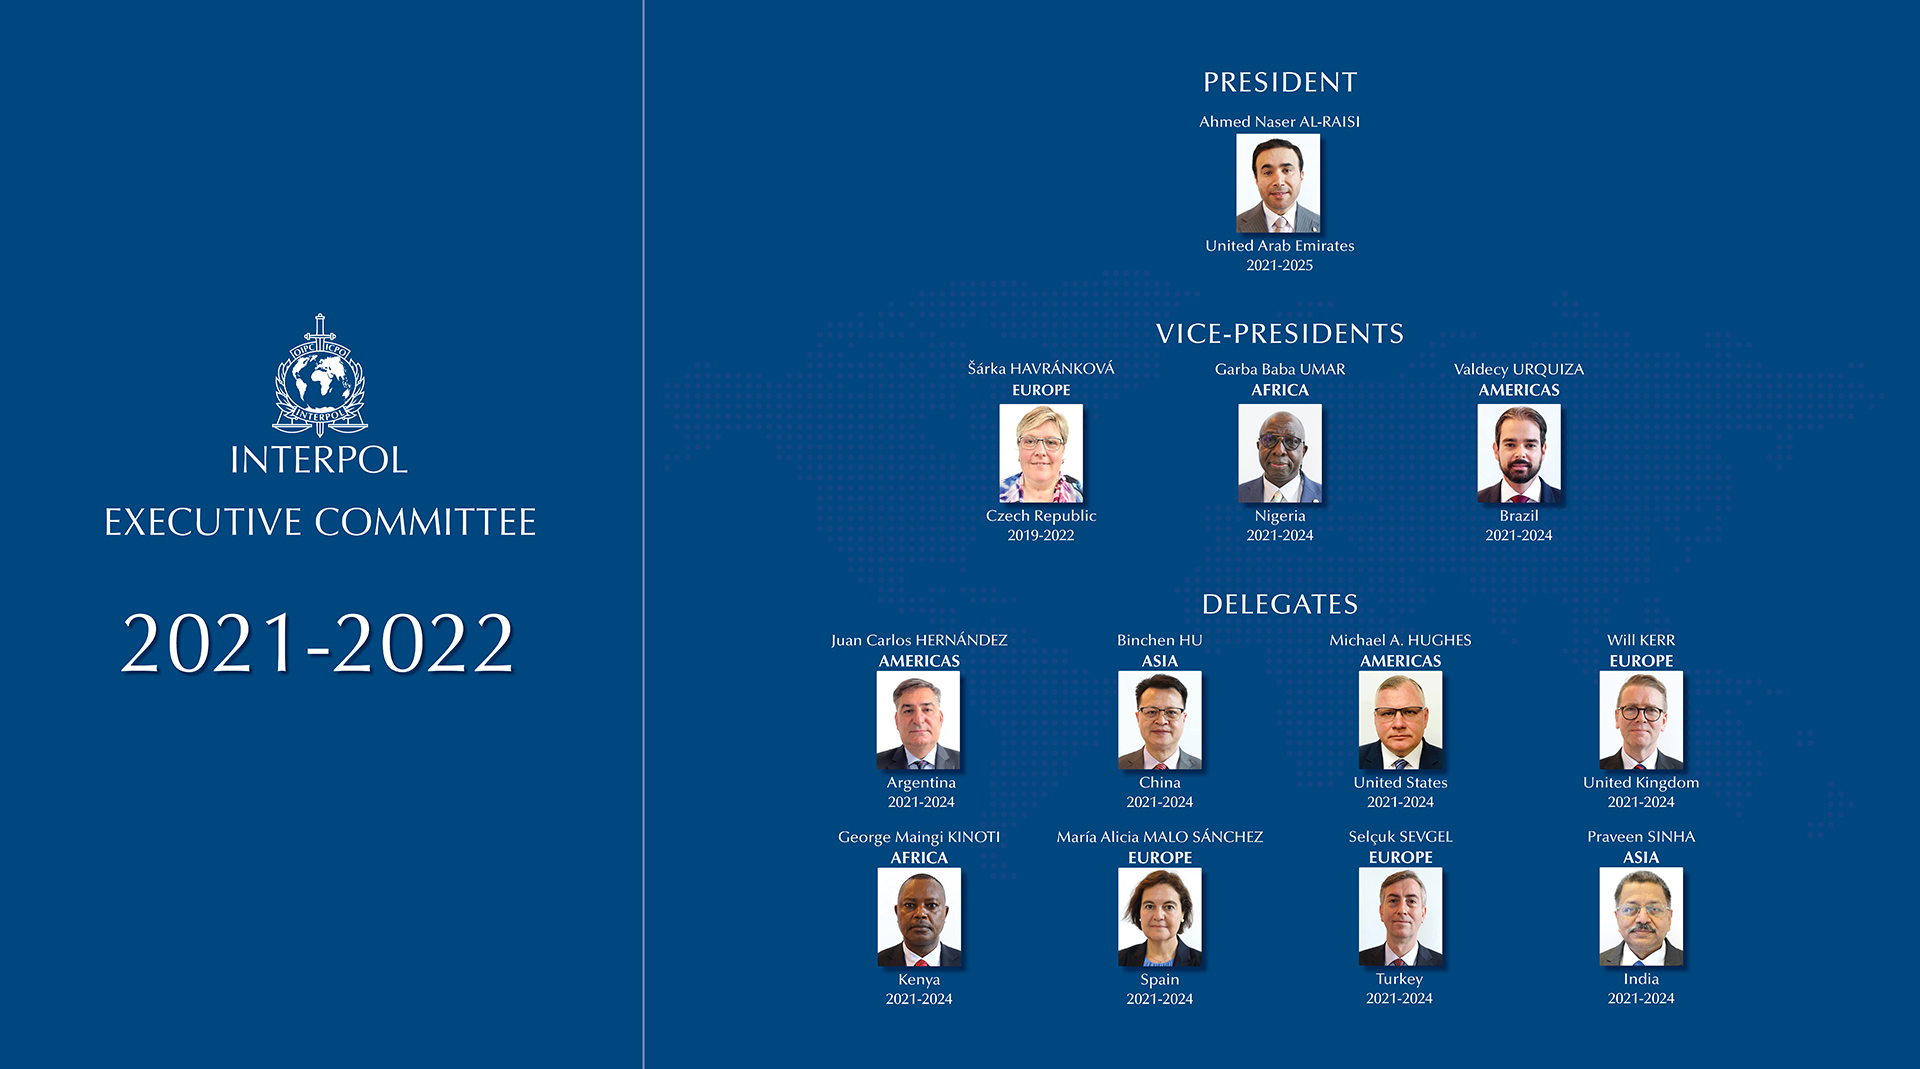 Executive Committee members 2021-2022